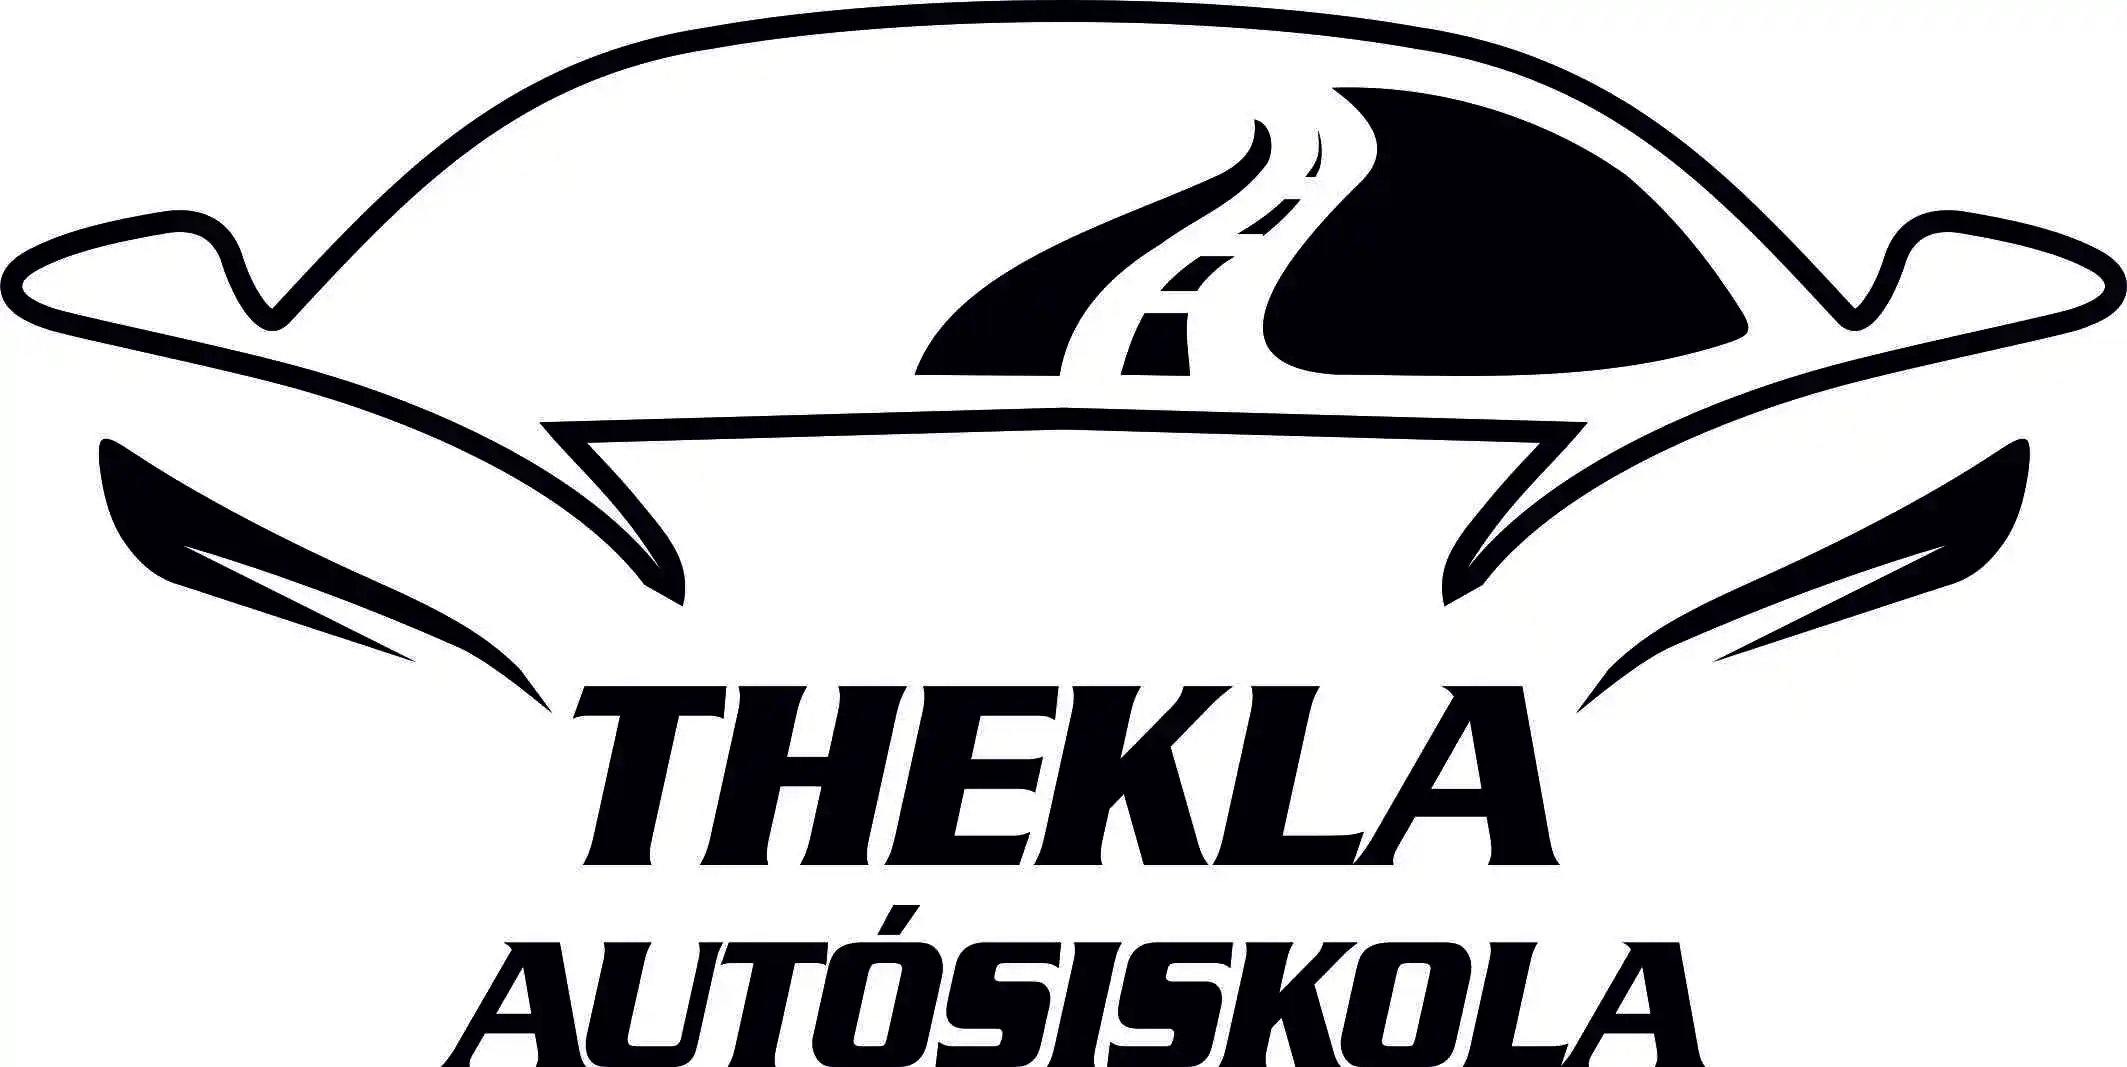 Thekla Autósiskola